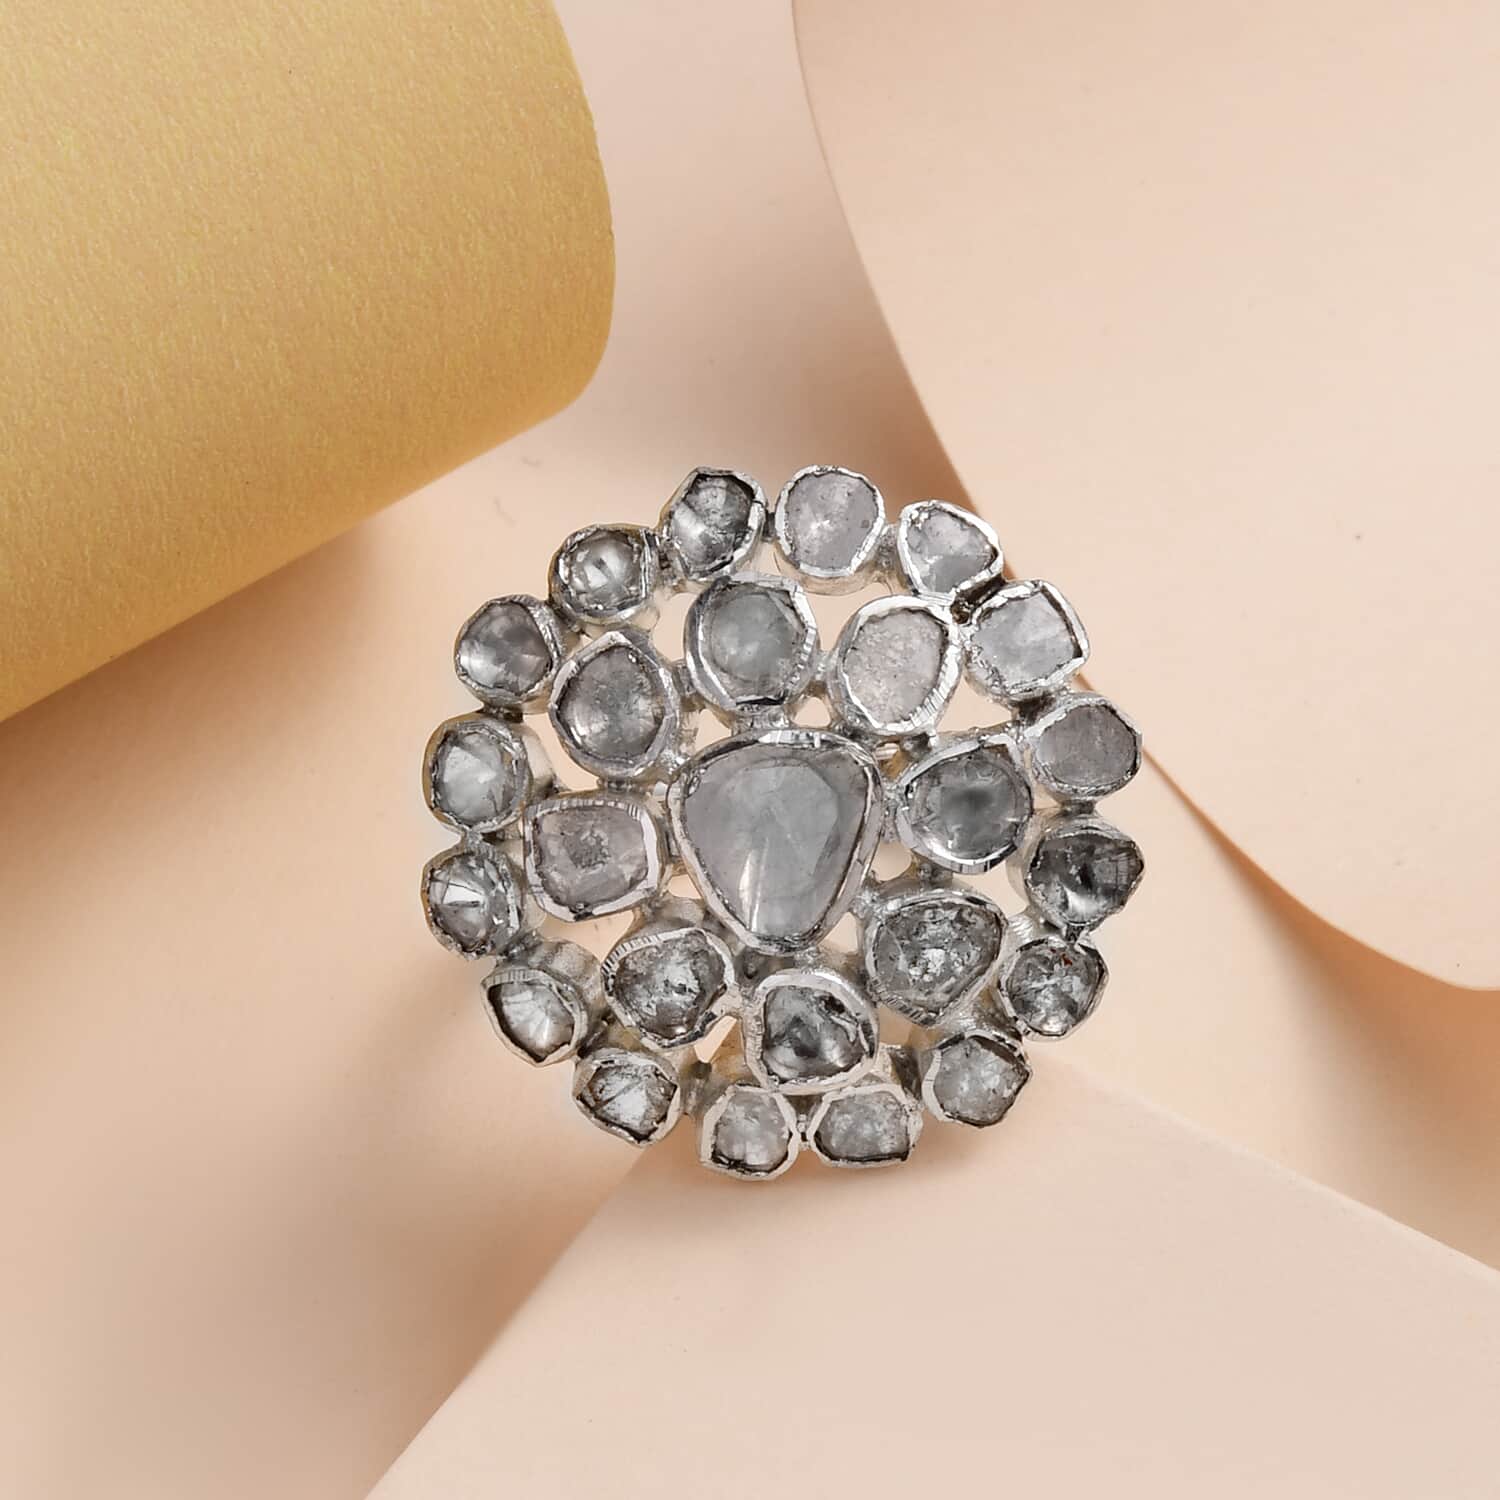 Polki Diamond Ring in Platinum Over Sterling Silver (Size 7.0) 2.00 ctw